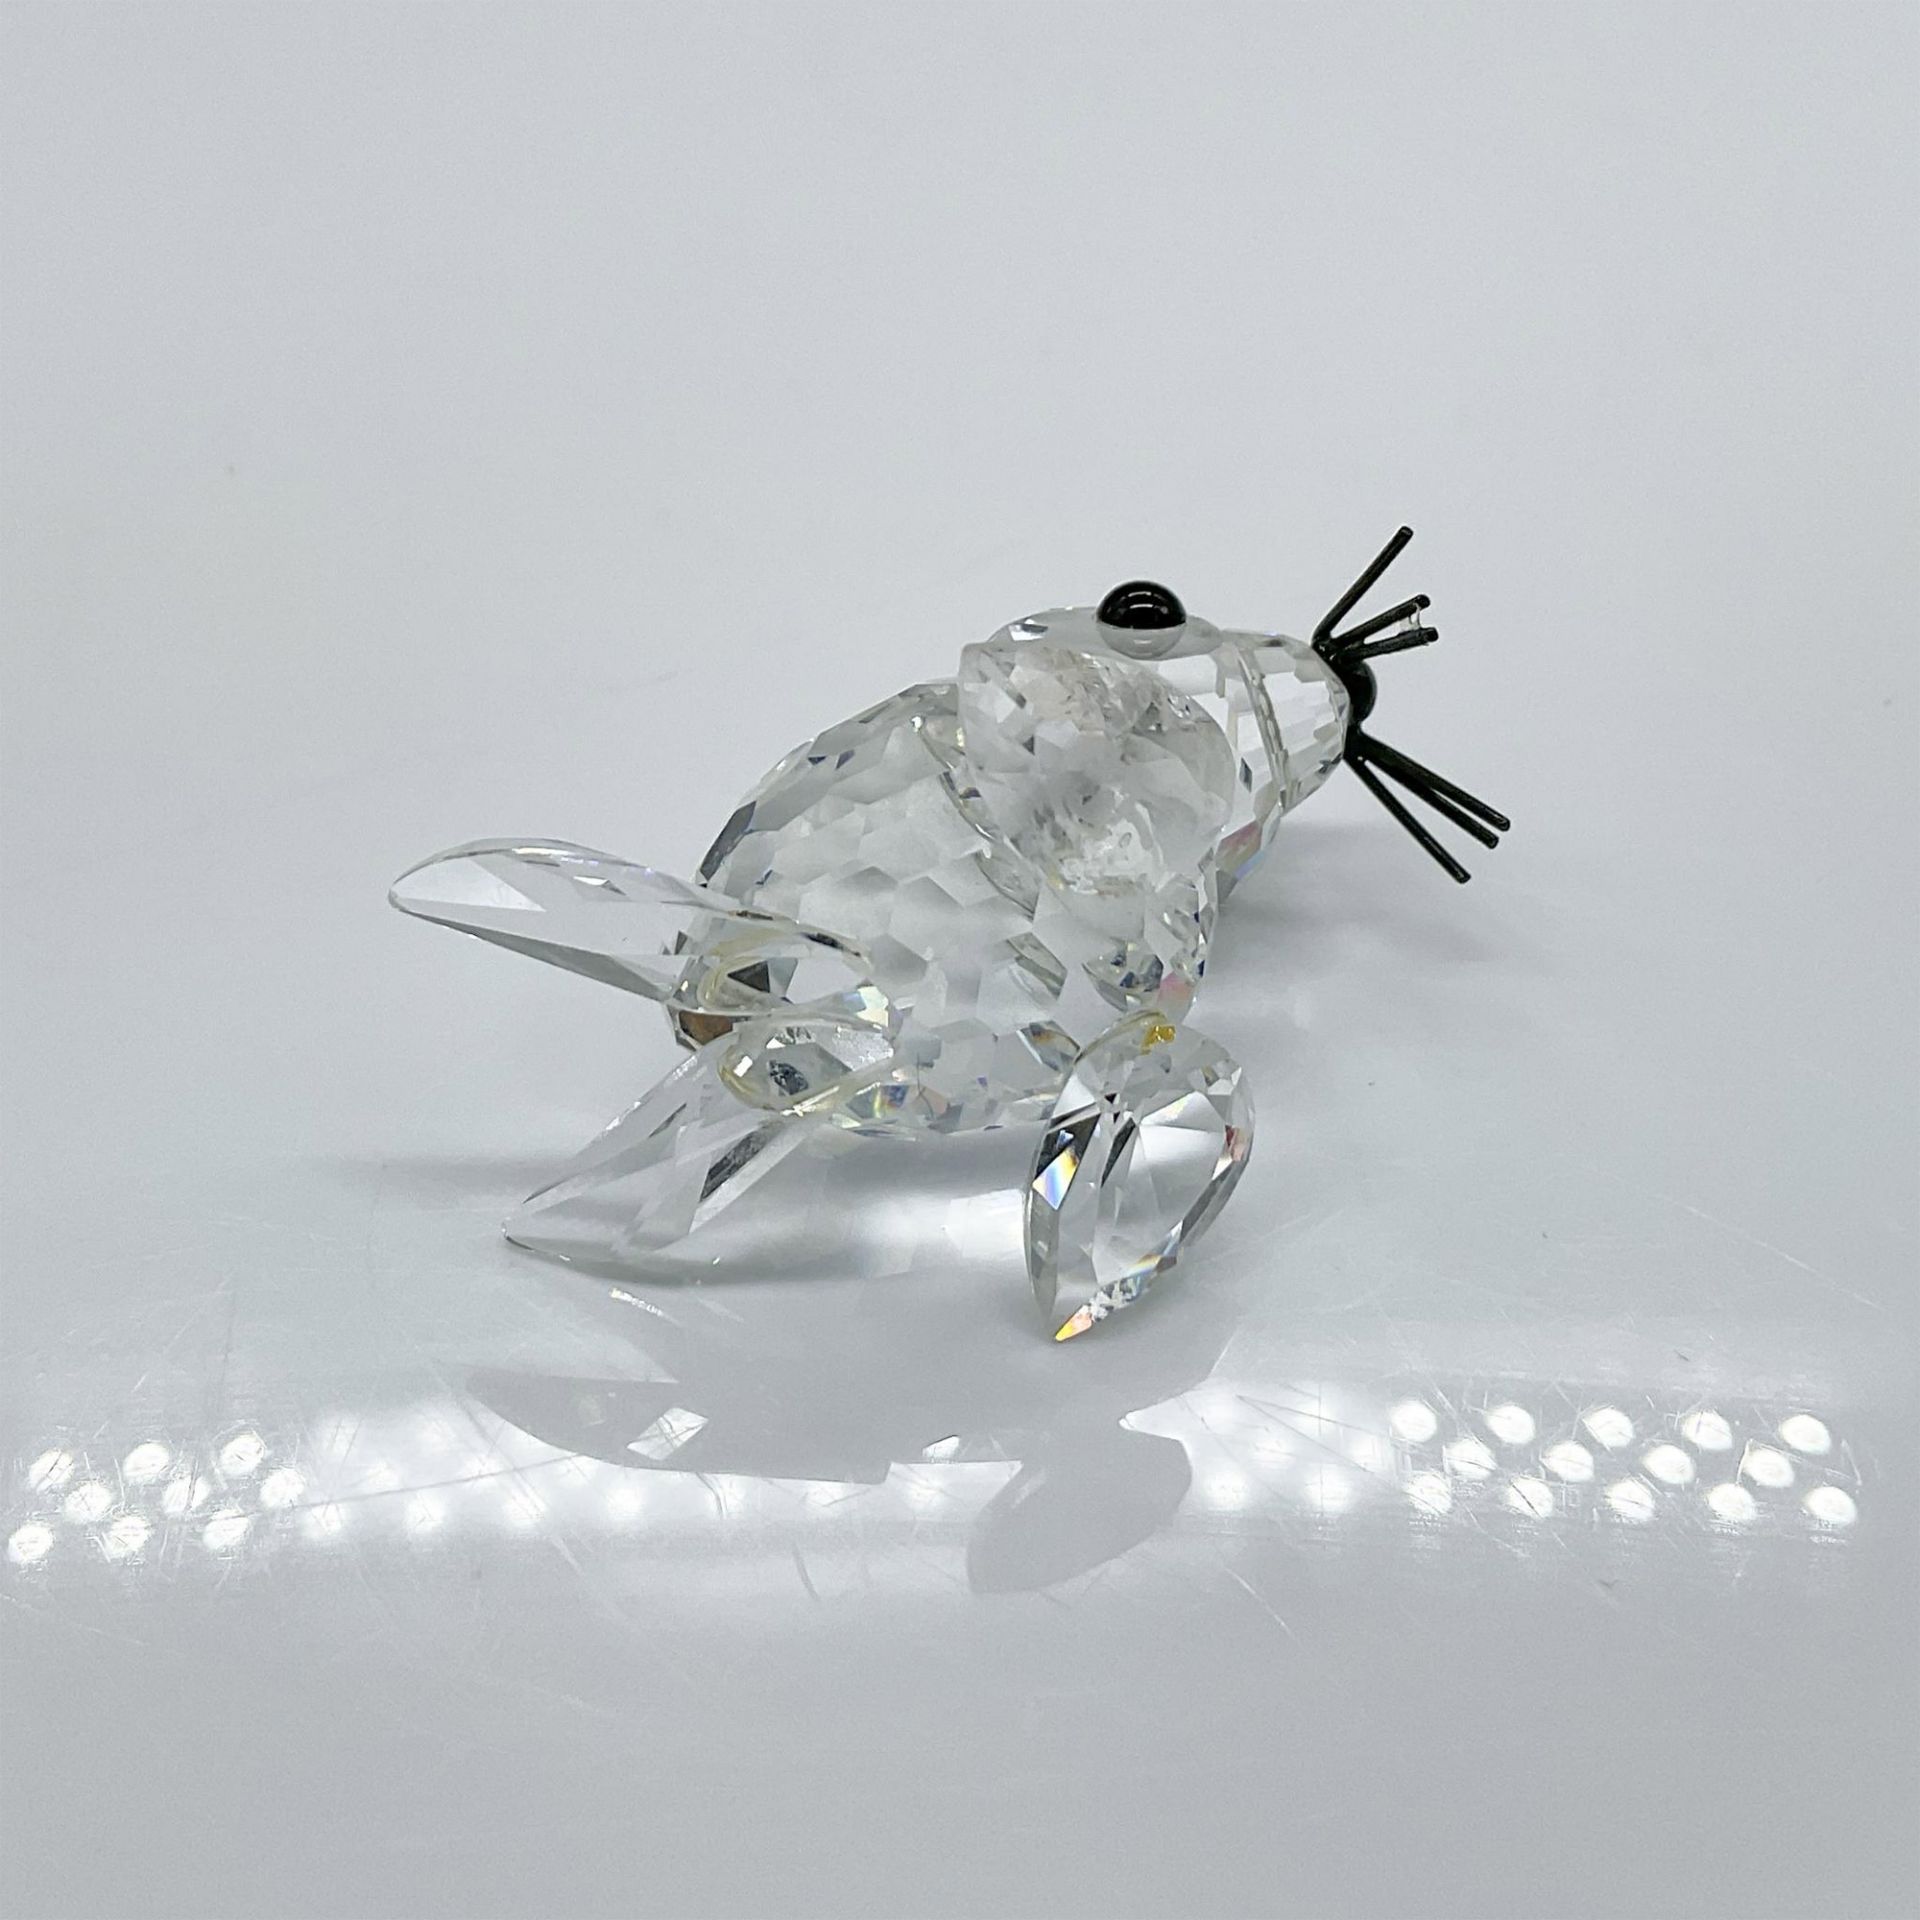 Swarovski Silver Crystal Figurine, Seal - Image 4 of 4